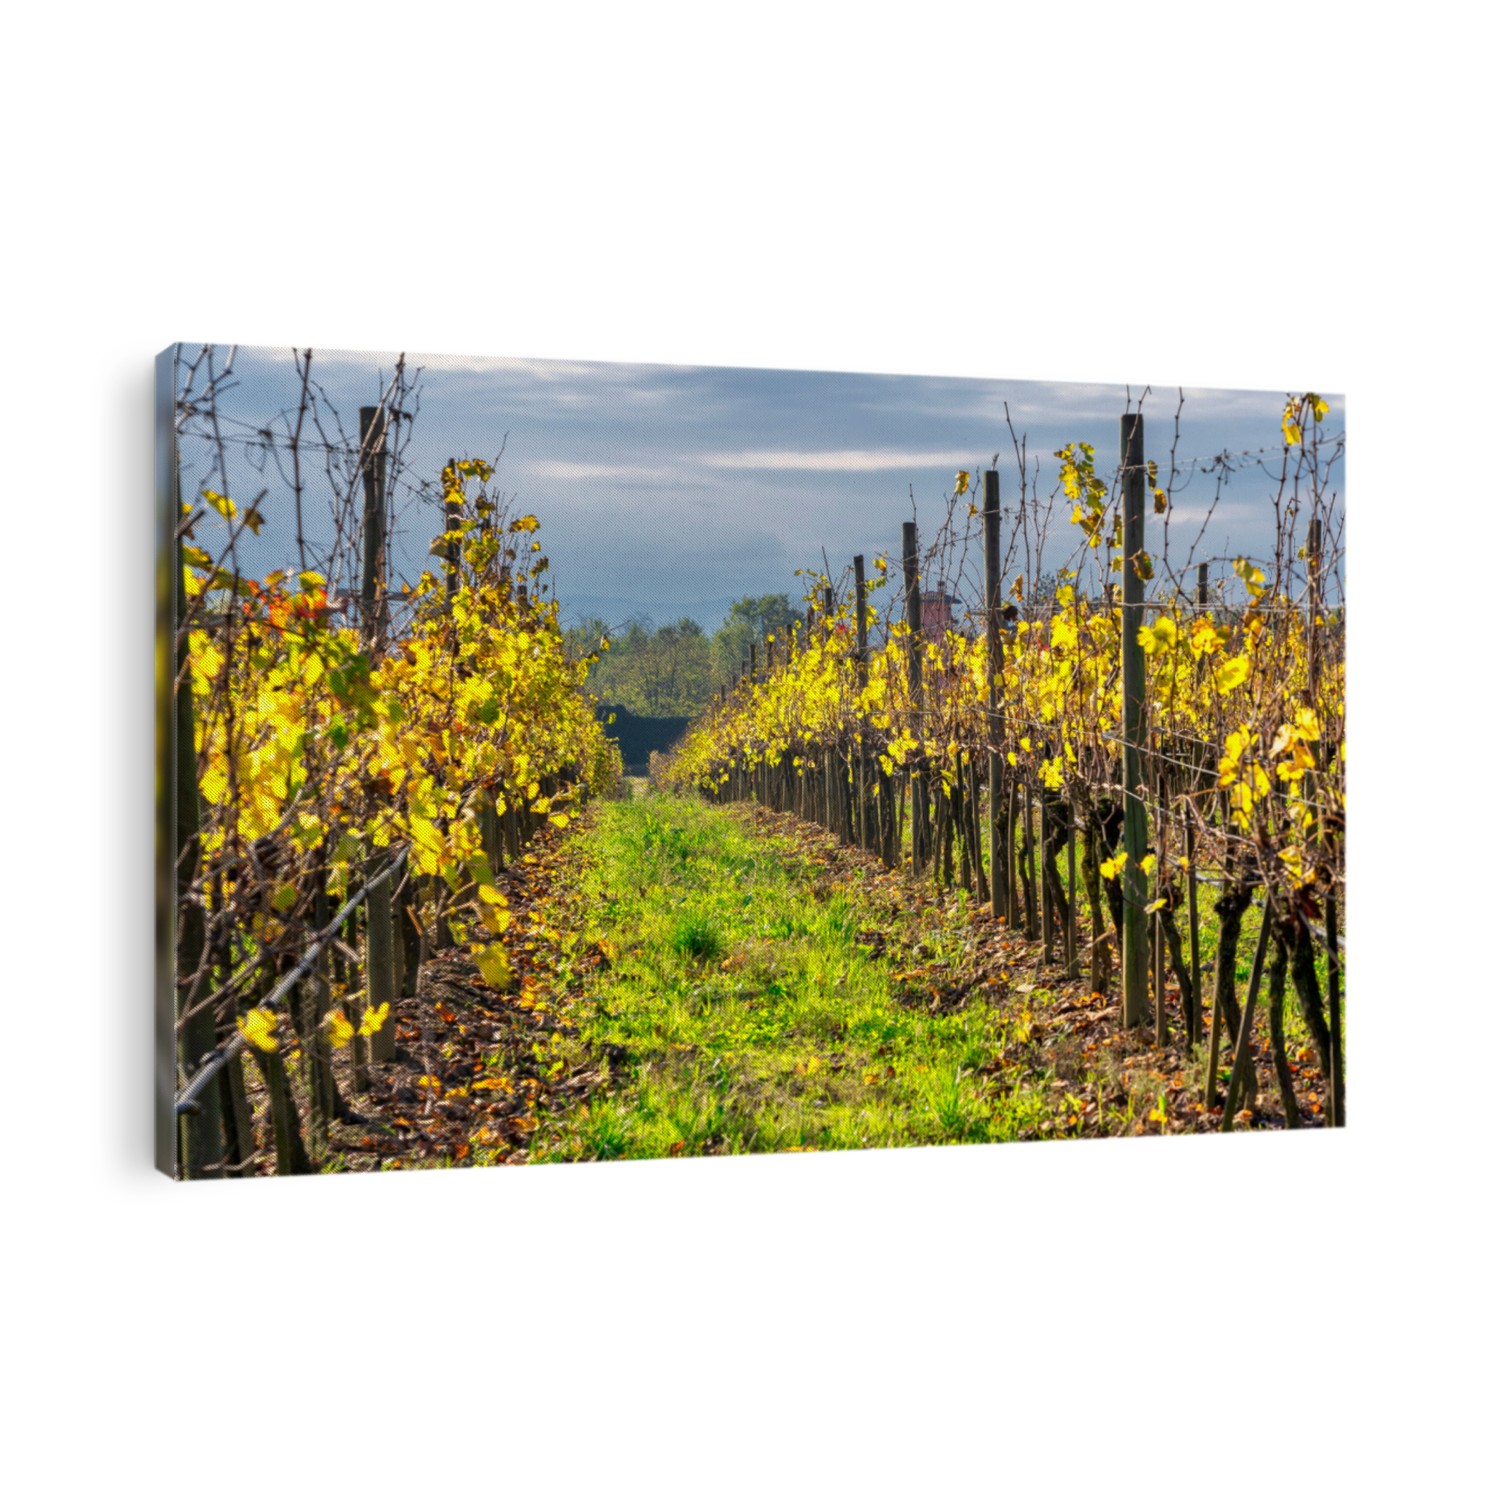 Vineyards of the San Colombano al Lambro hill, Milan, Lombardy, Italy, at fall